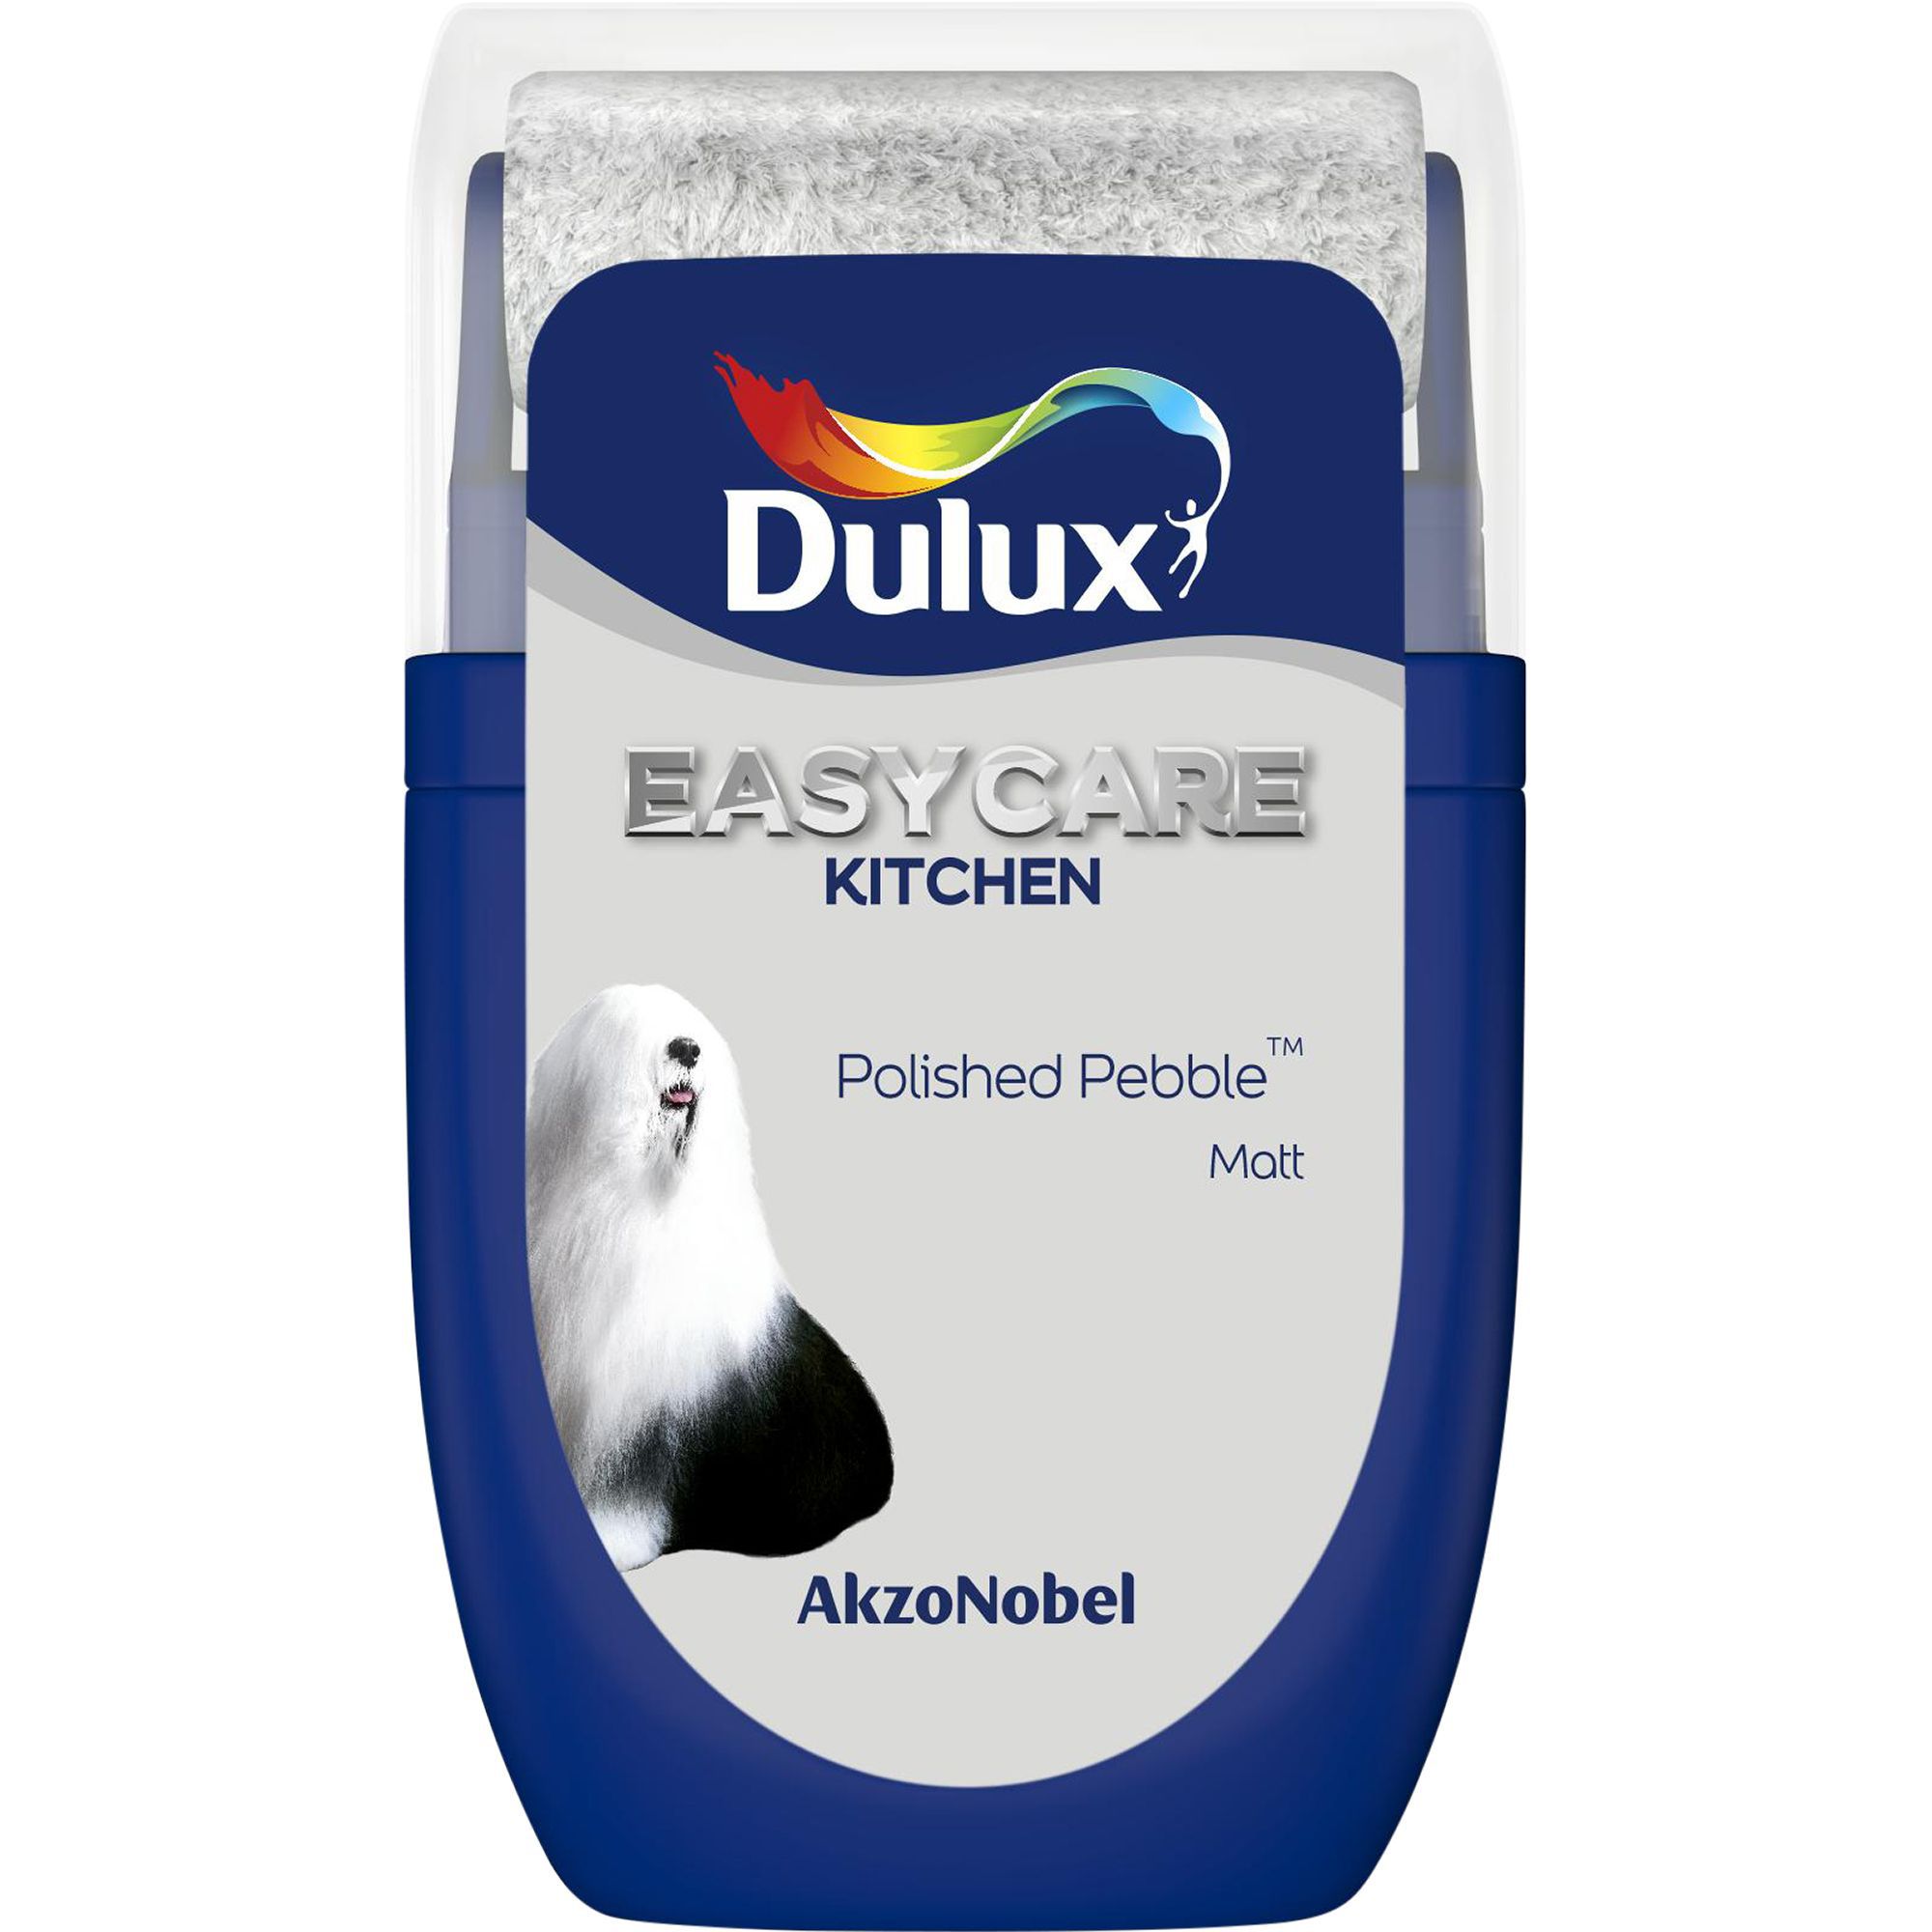 Dulux Easycare Kitchen Polished pebble Matt Emulsion paint, 30ml